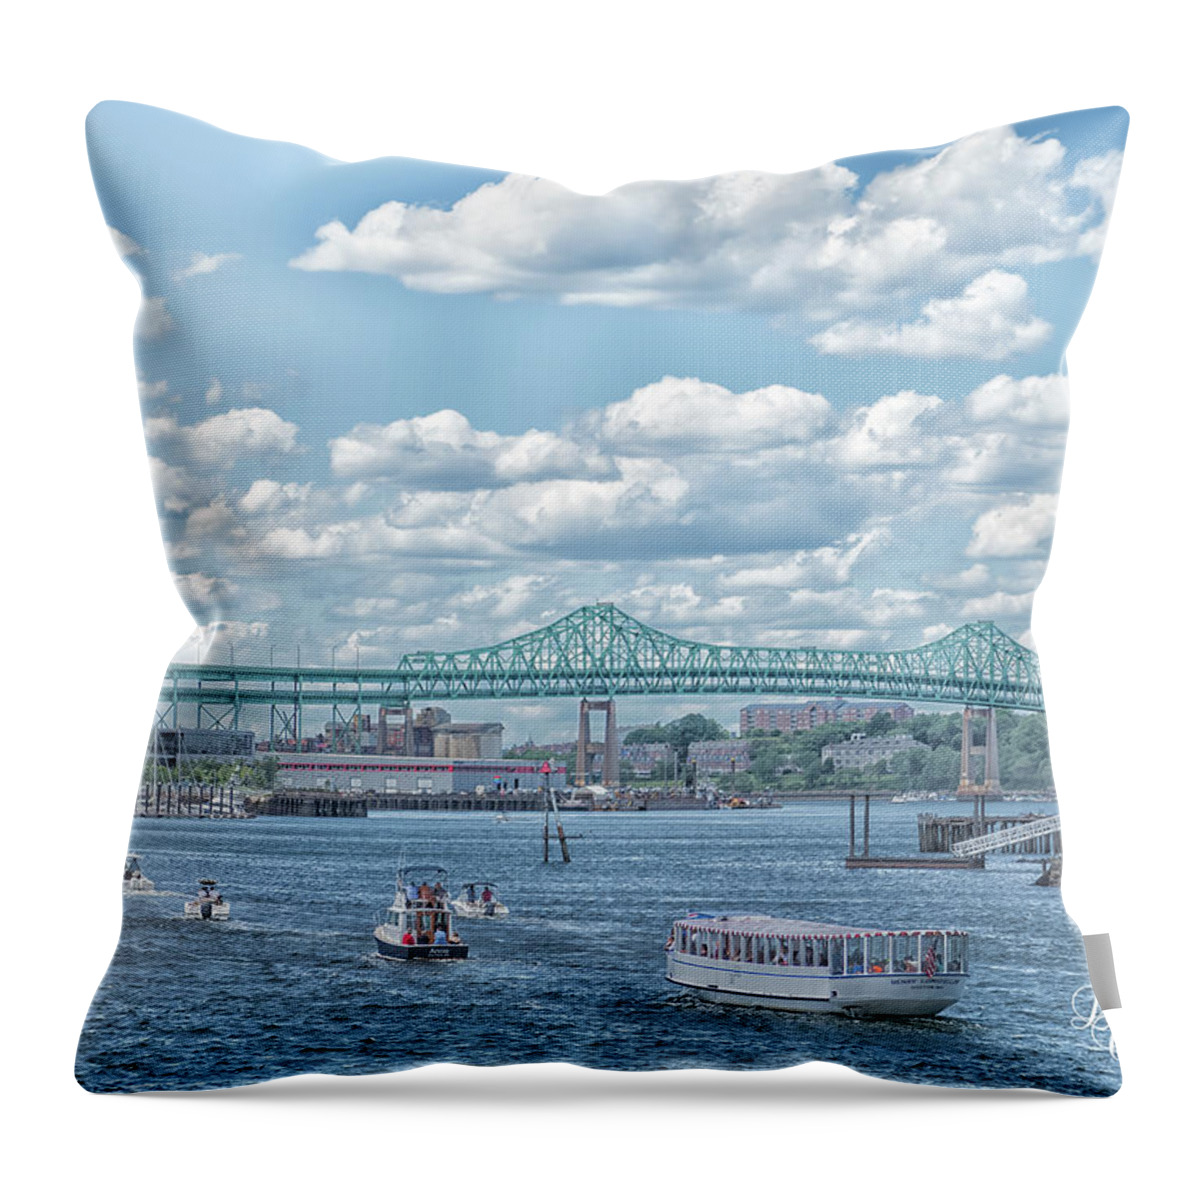 Mystic River Bridge Throw Pillow featuring the photograph Mystic River Bridge by Linda Constant